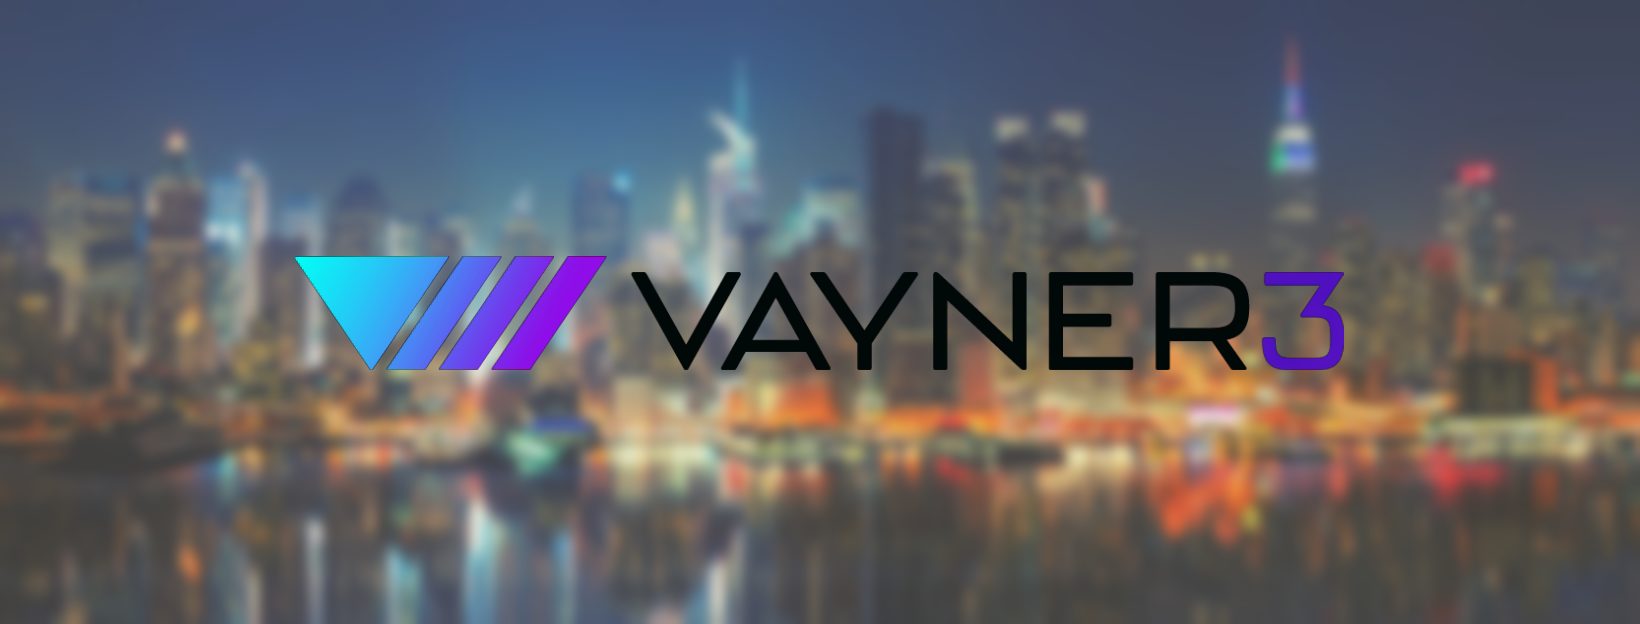 Gary Vaynerchuk Announces VaynerNFT is now Vayner3, leading the next iteration of consumer behavior.